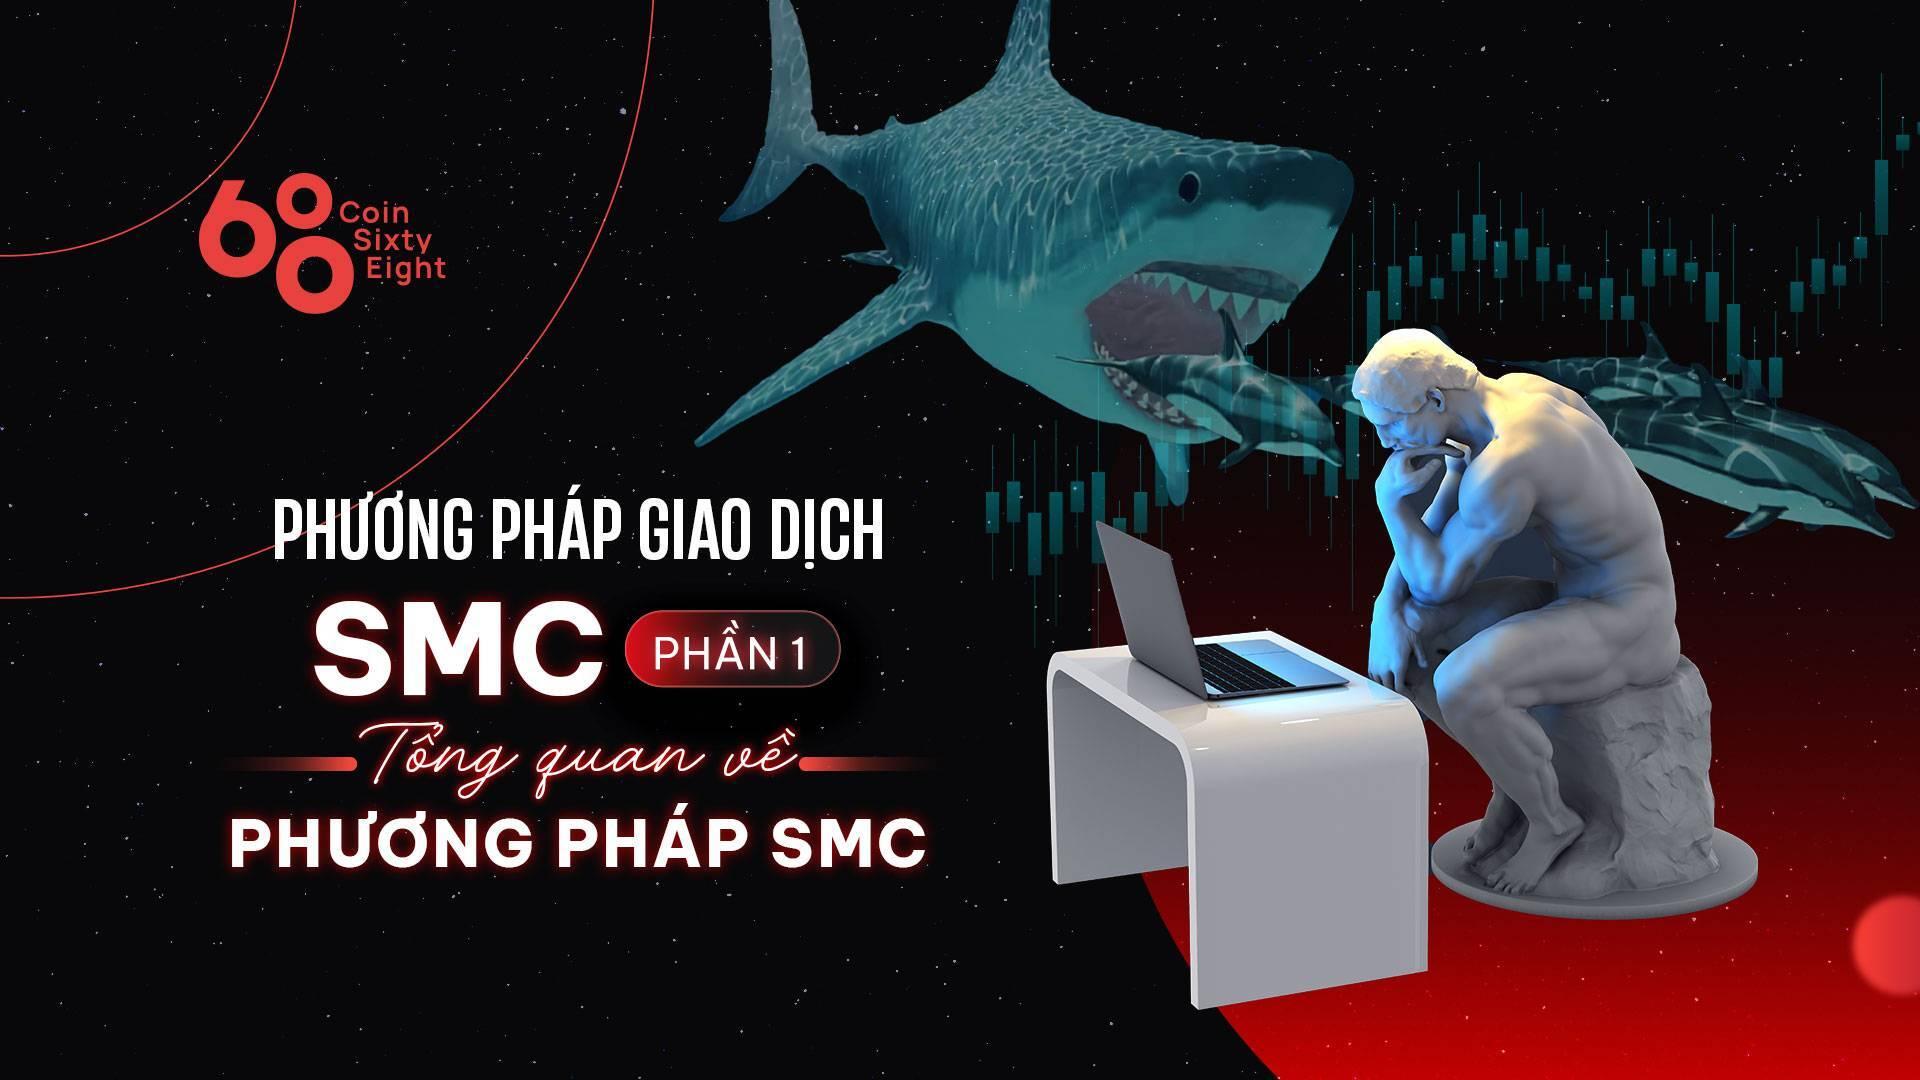 phuong-phap-giao-dich-smc-phan-1-tong-quan-ve-phuong-phap-smc